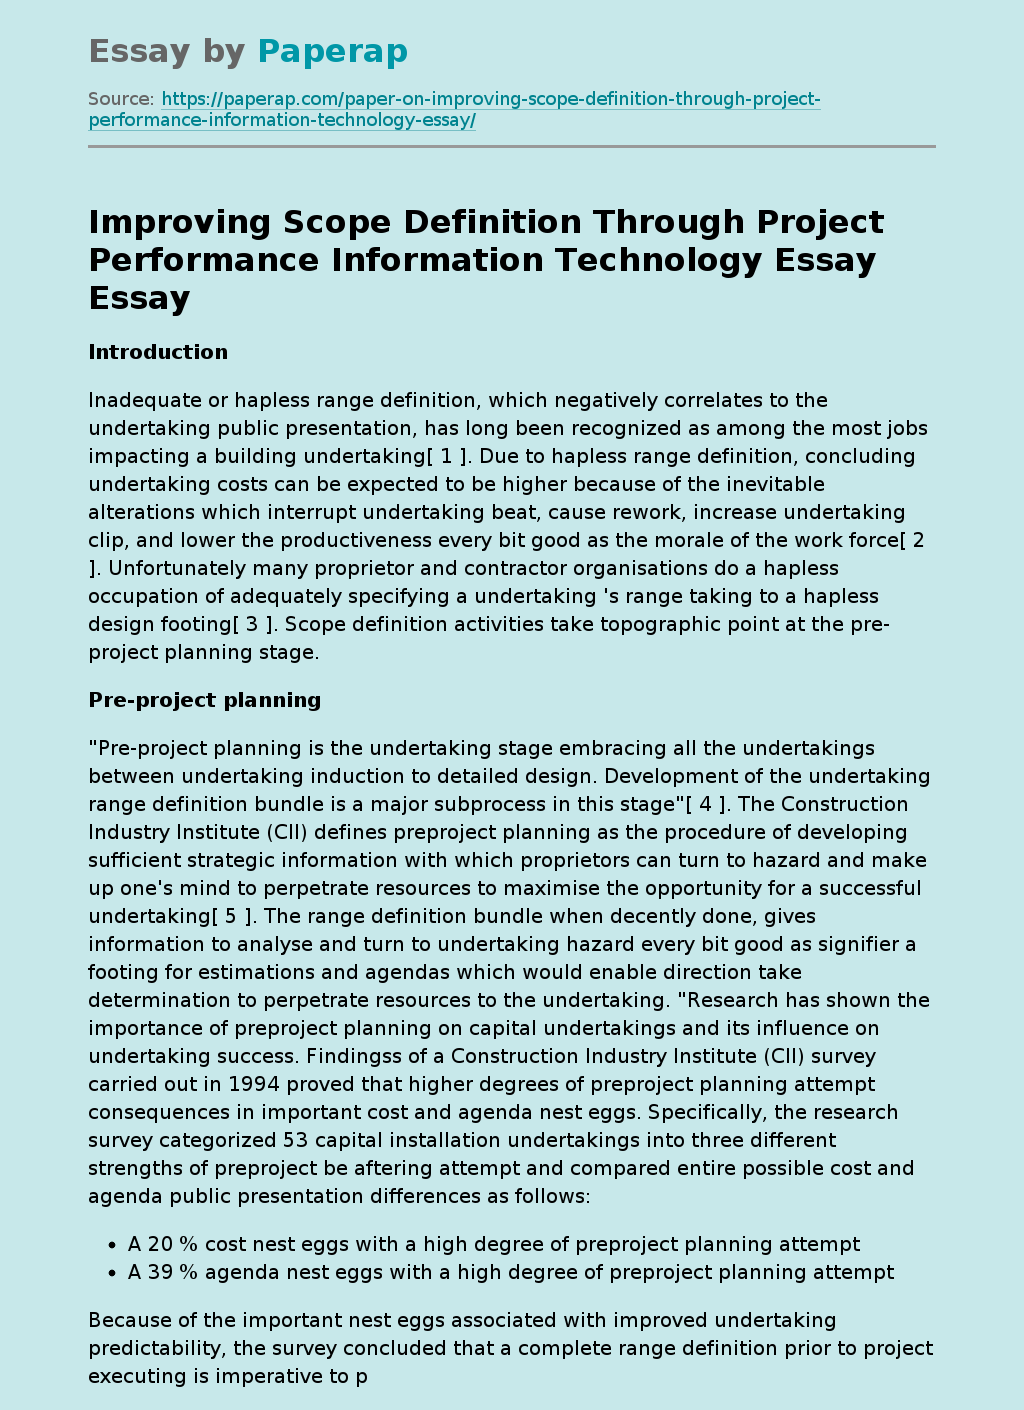 Scope Definition Improvement Through IT Project Performance